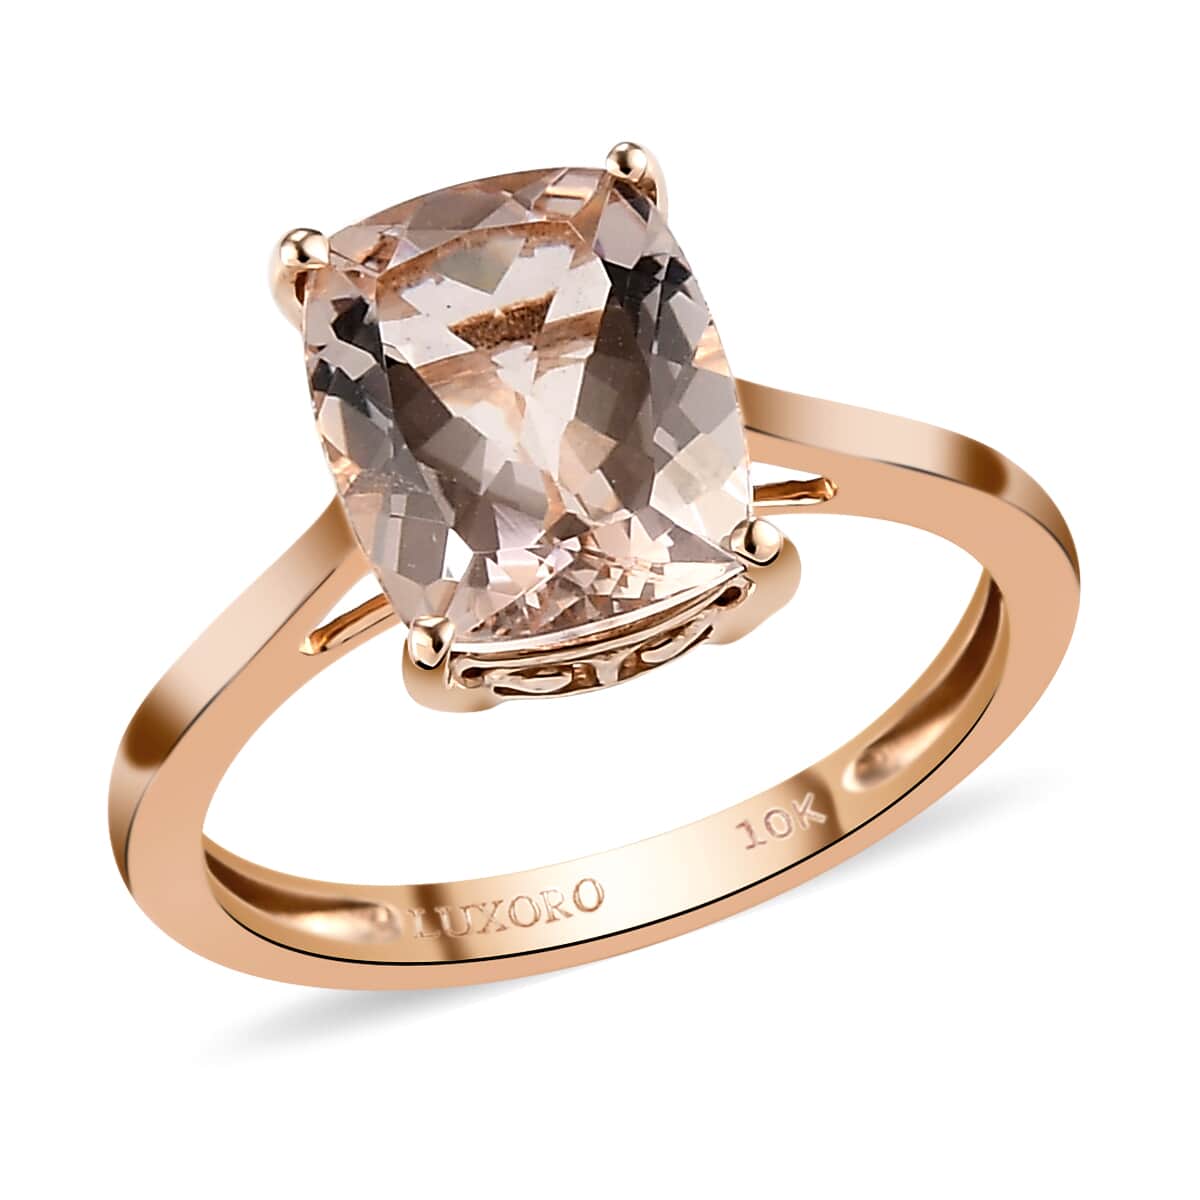 LUXORO 10K Rose Gold AAA Marropino Morganite Solitaire Ring (Size 10.0) 2.15 Grams 2.60 ctw image number 0